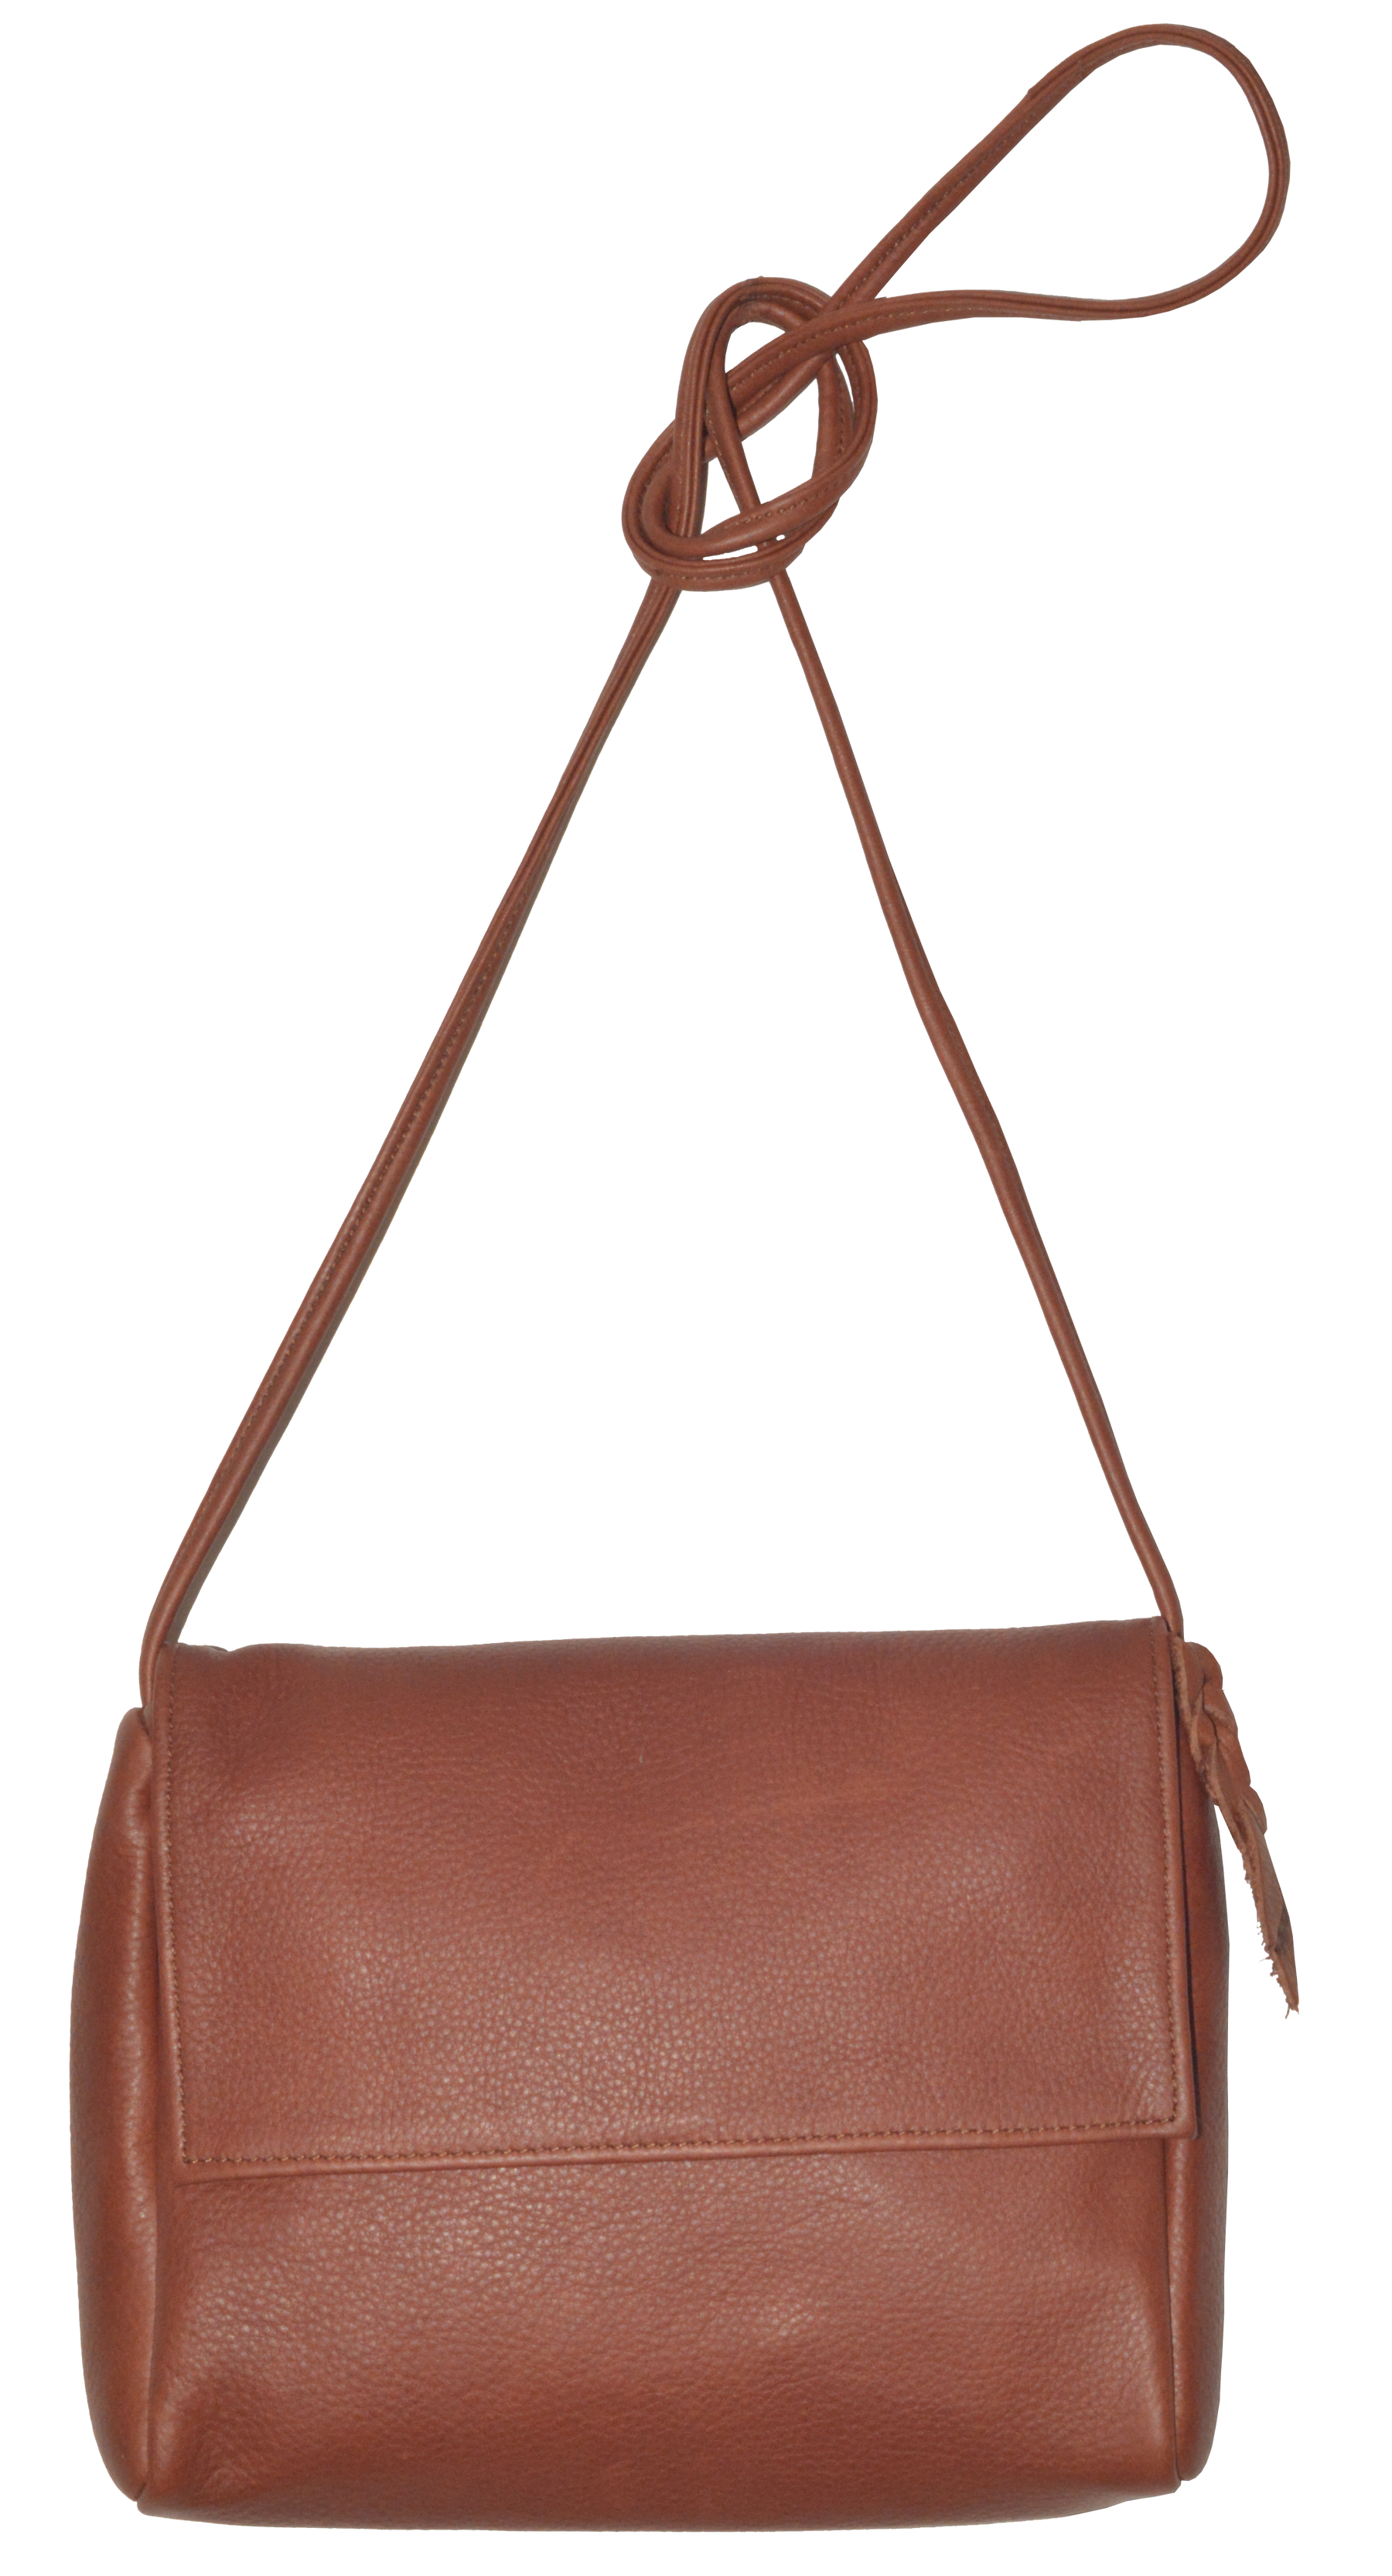 SVEN Style No. 115 Crossbody/Shoulder Bag cognac tan leather